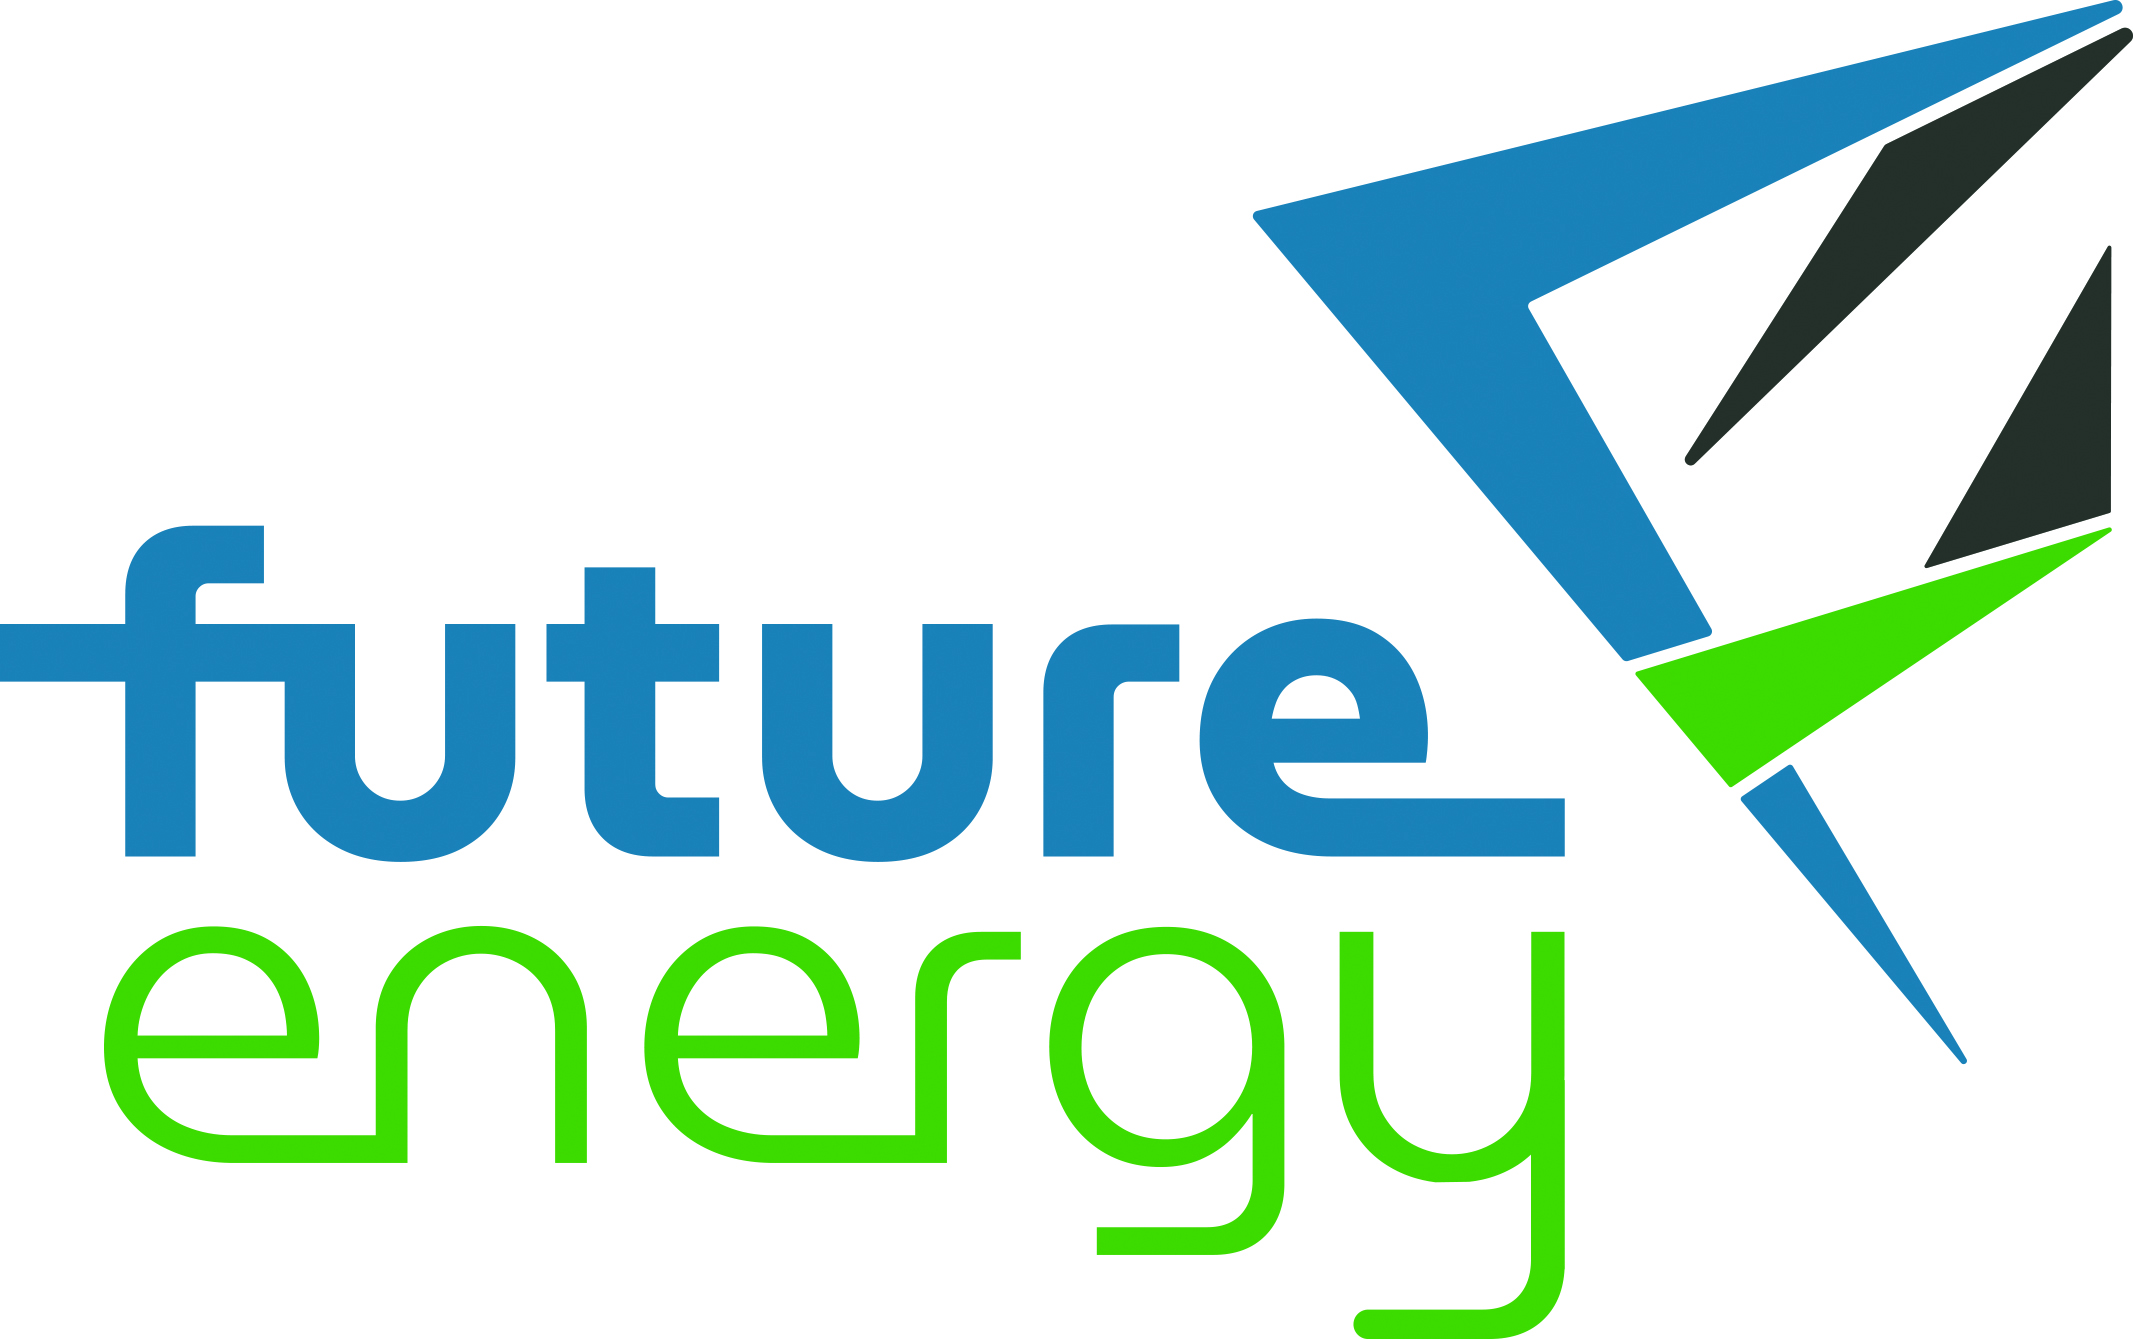 Future Energy Australia